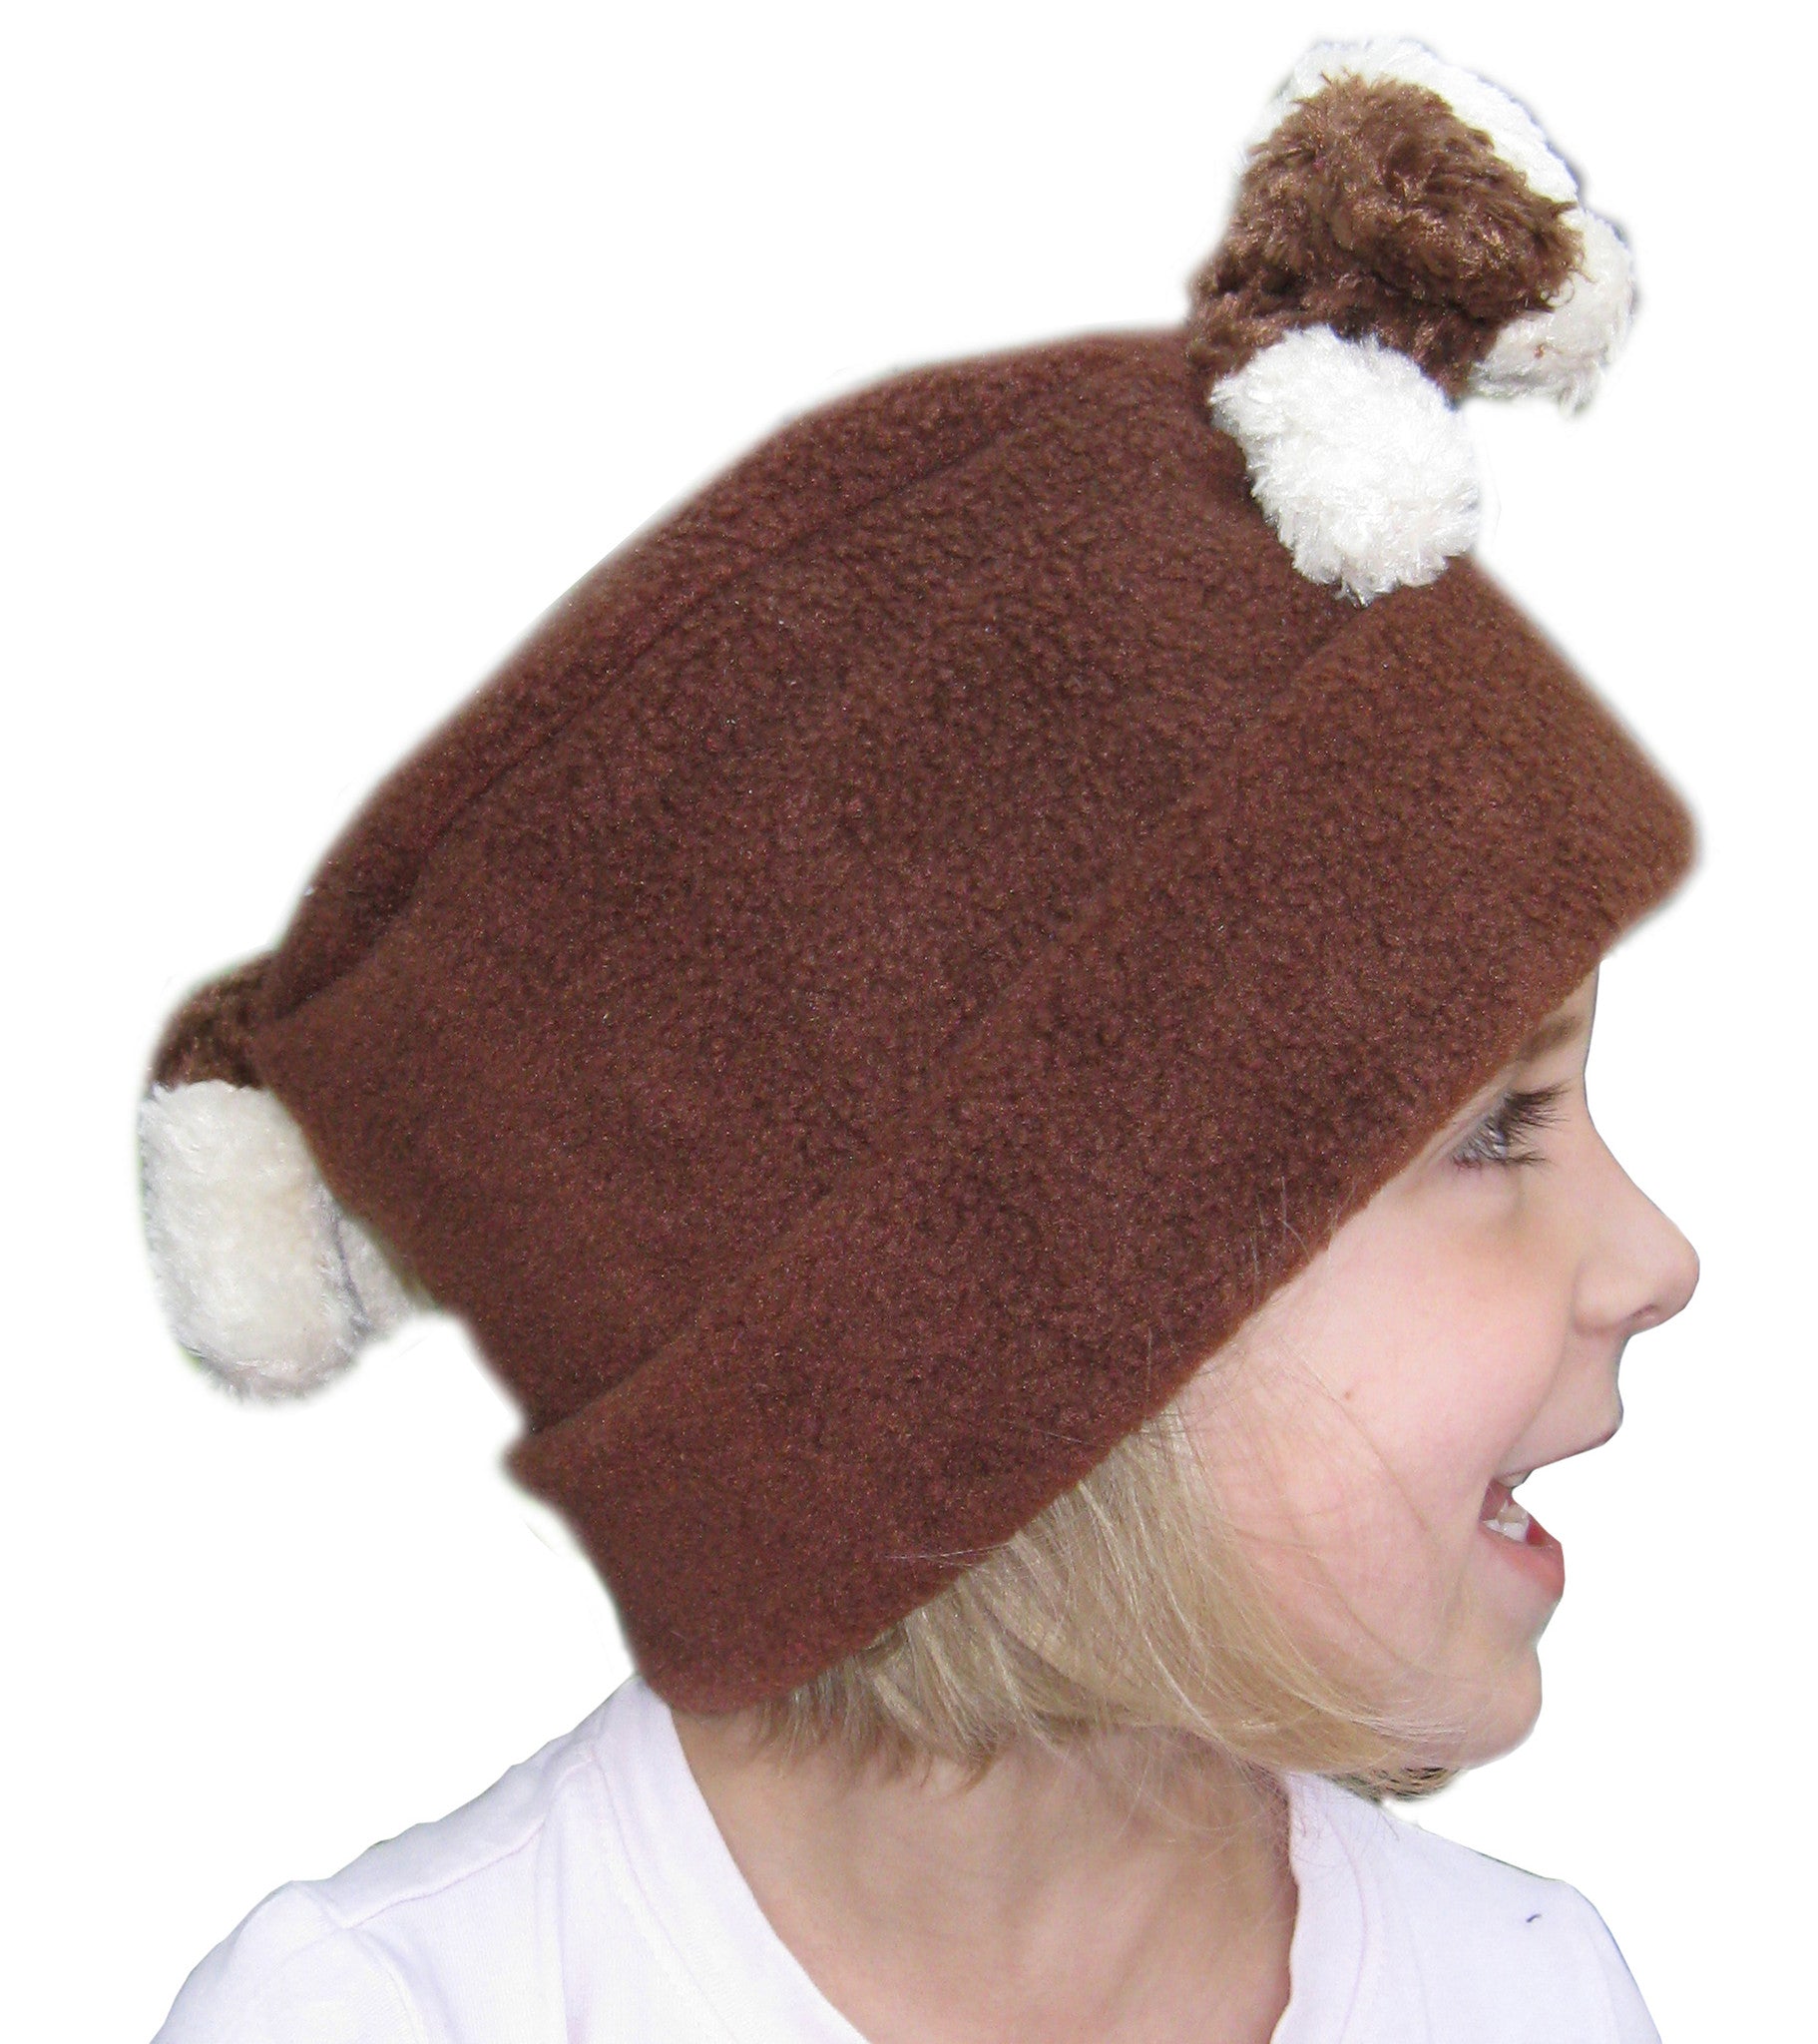 Brown & Cream Dog on Brown Fleece Buddy Hat